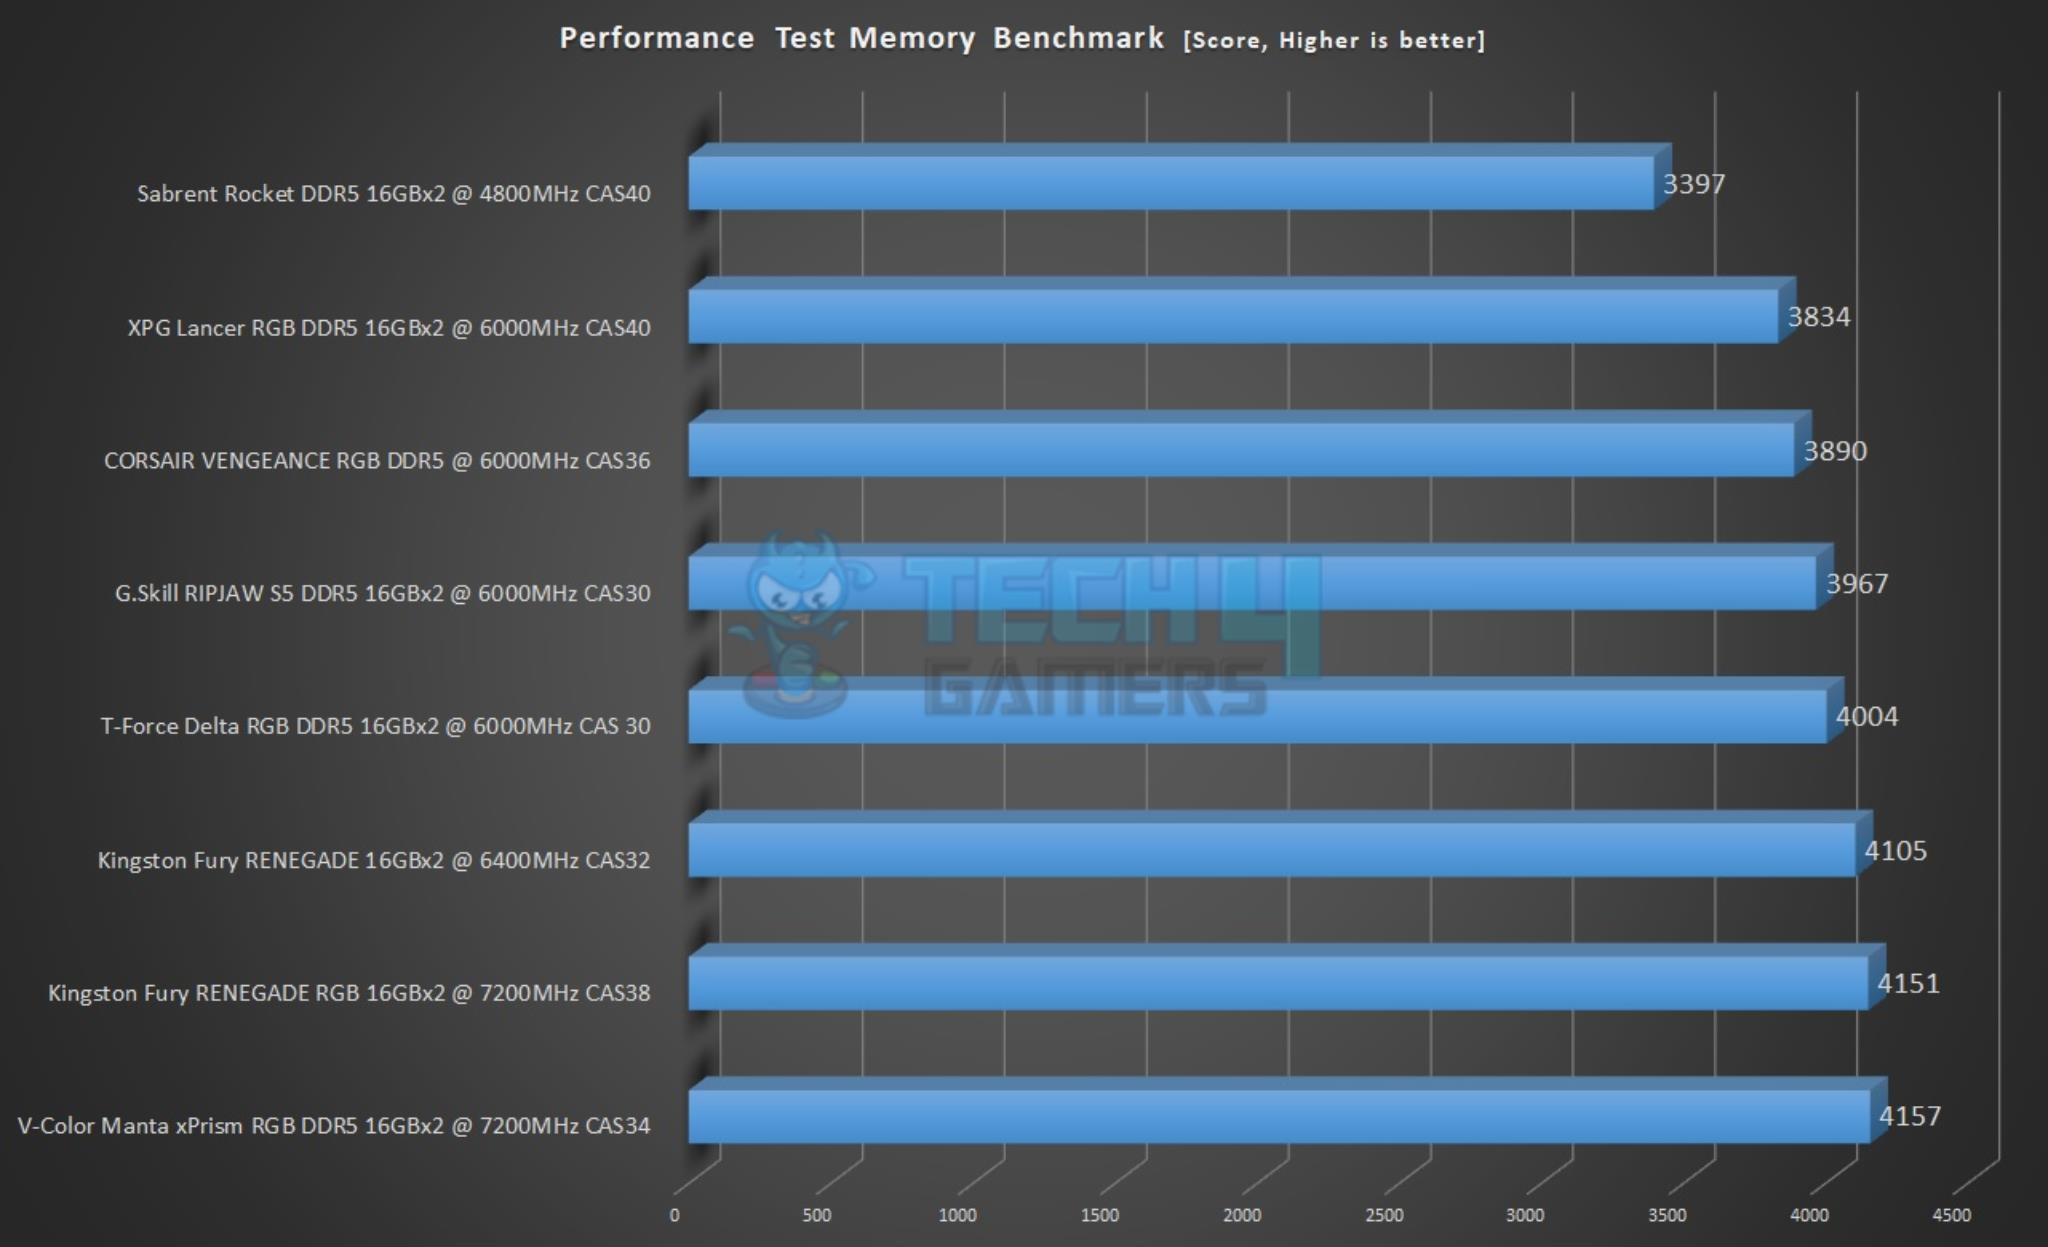 V-Color Manta xPrism RGB DDR5 32GB — Performance Test Memory Benchmark